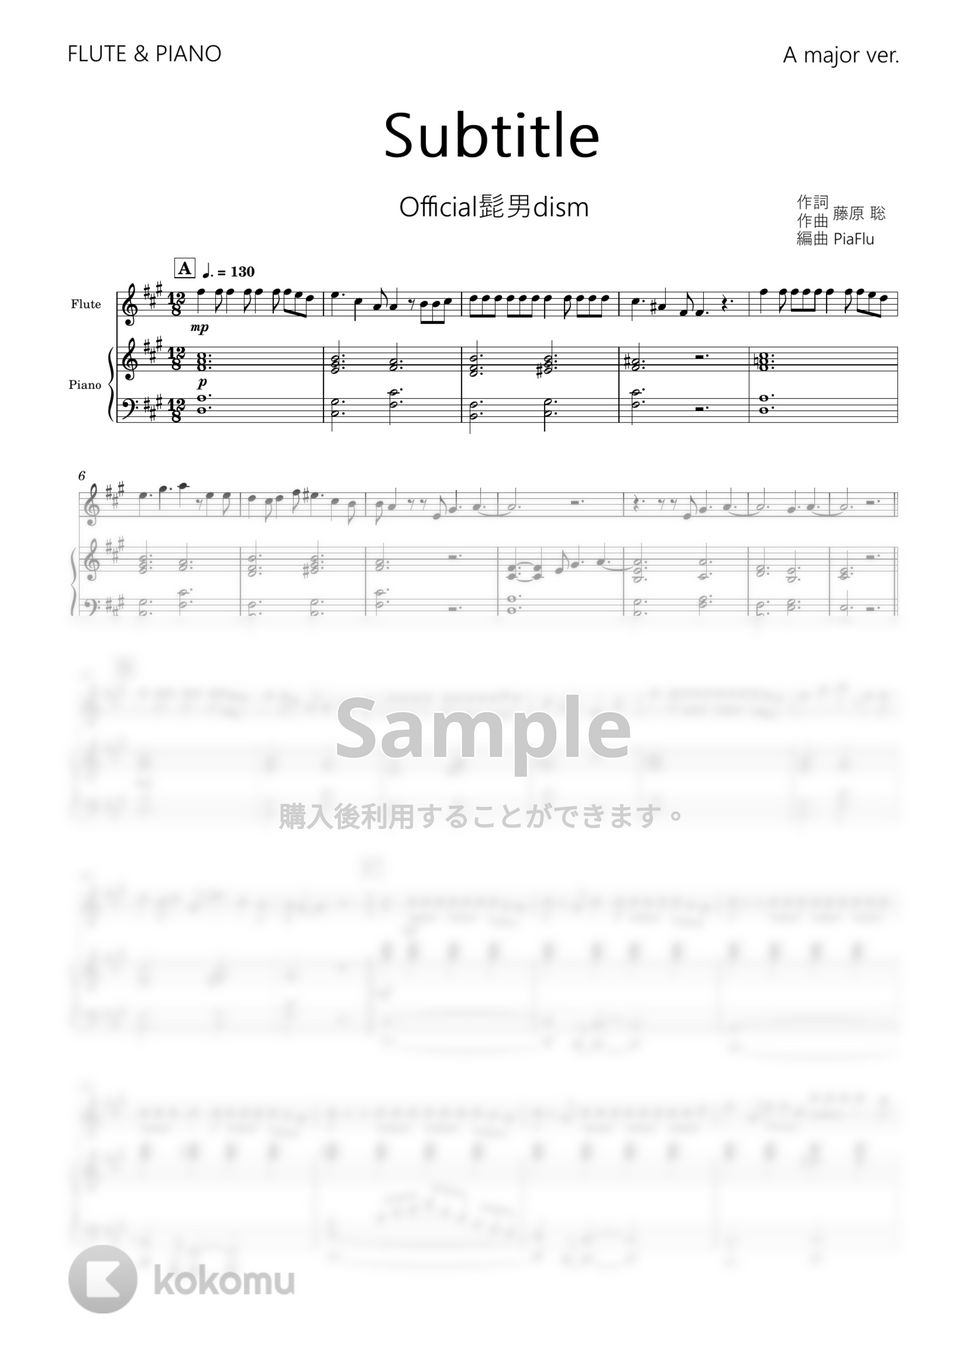 Official髭男dism - Subtitle (フルート&ピアノ伴奏 / Aメジャーver.) by PiaFlu